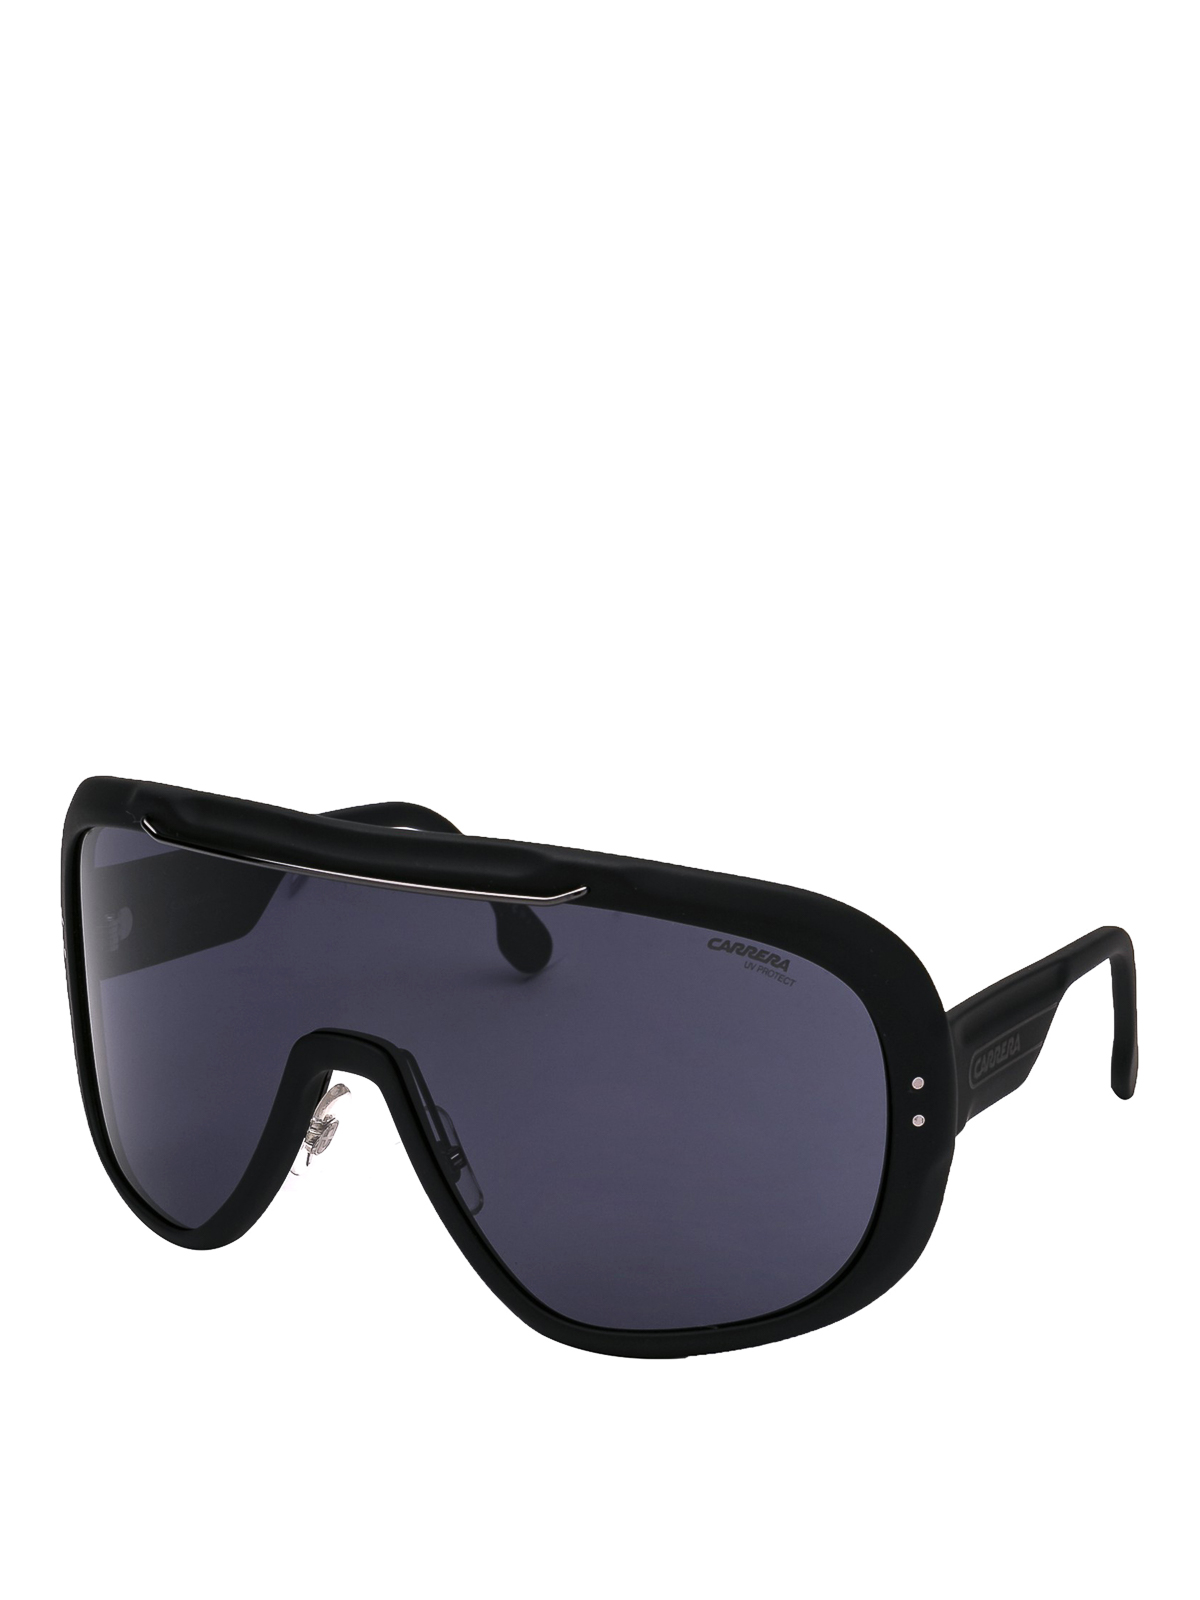 Sunglasses Carrera - Epica oversize sunglasses - CARRERAEPICA990032K